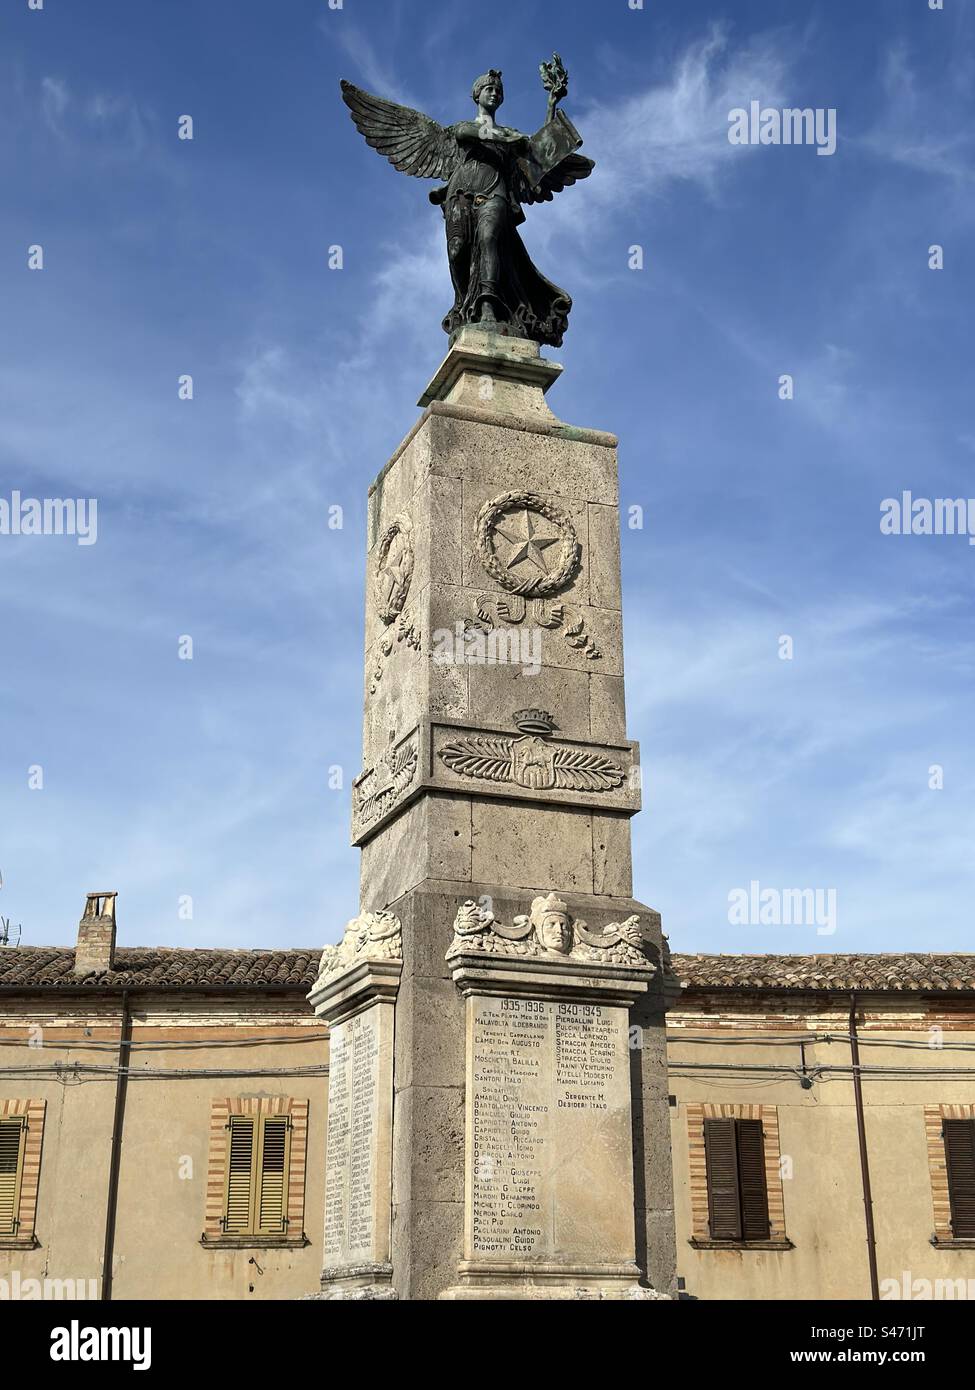 War memorial monument, Donna Bianca De Tharolis square, Ripatransone, Marche region, Italy Stock Photo